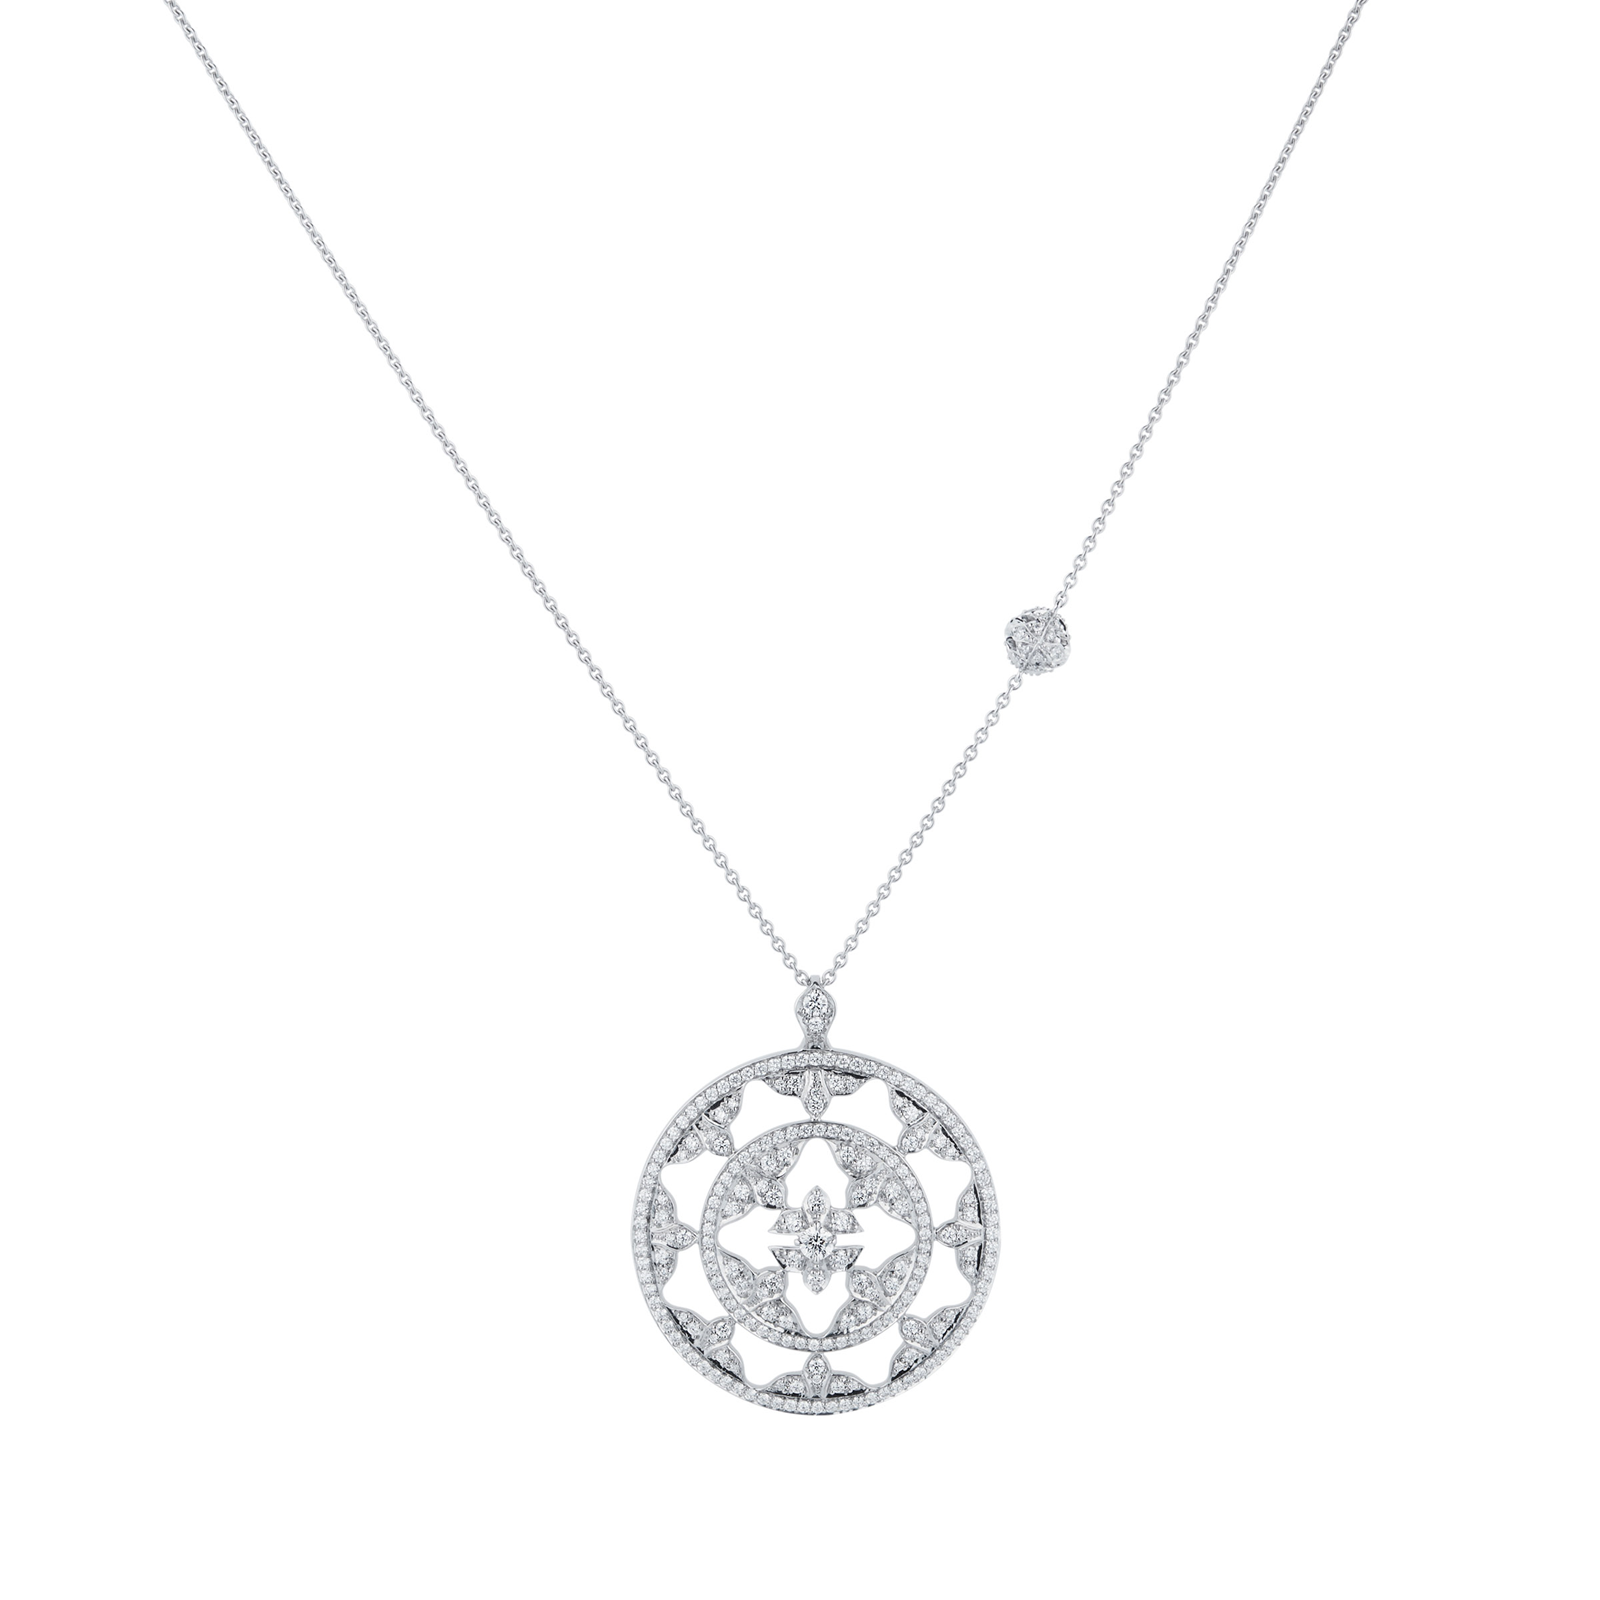 Empress 18ct White Gold 1.20cttw Diamond Pendant | Necklaces ...